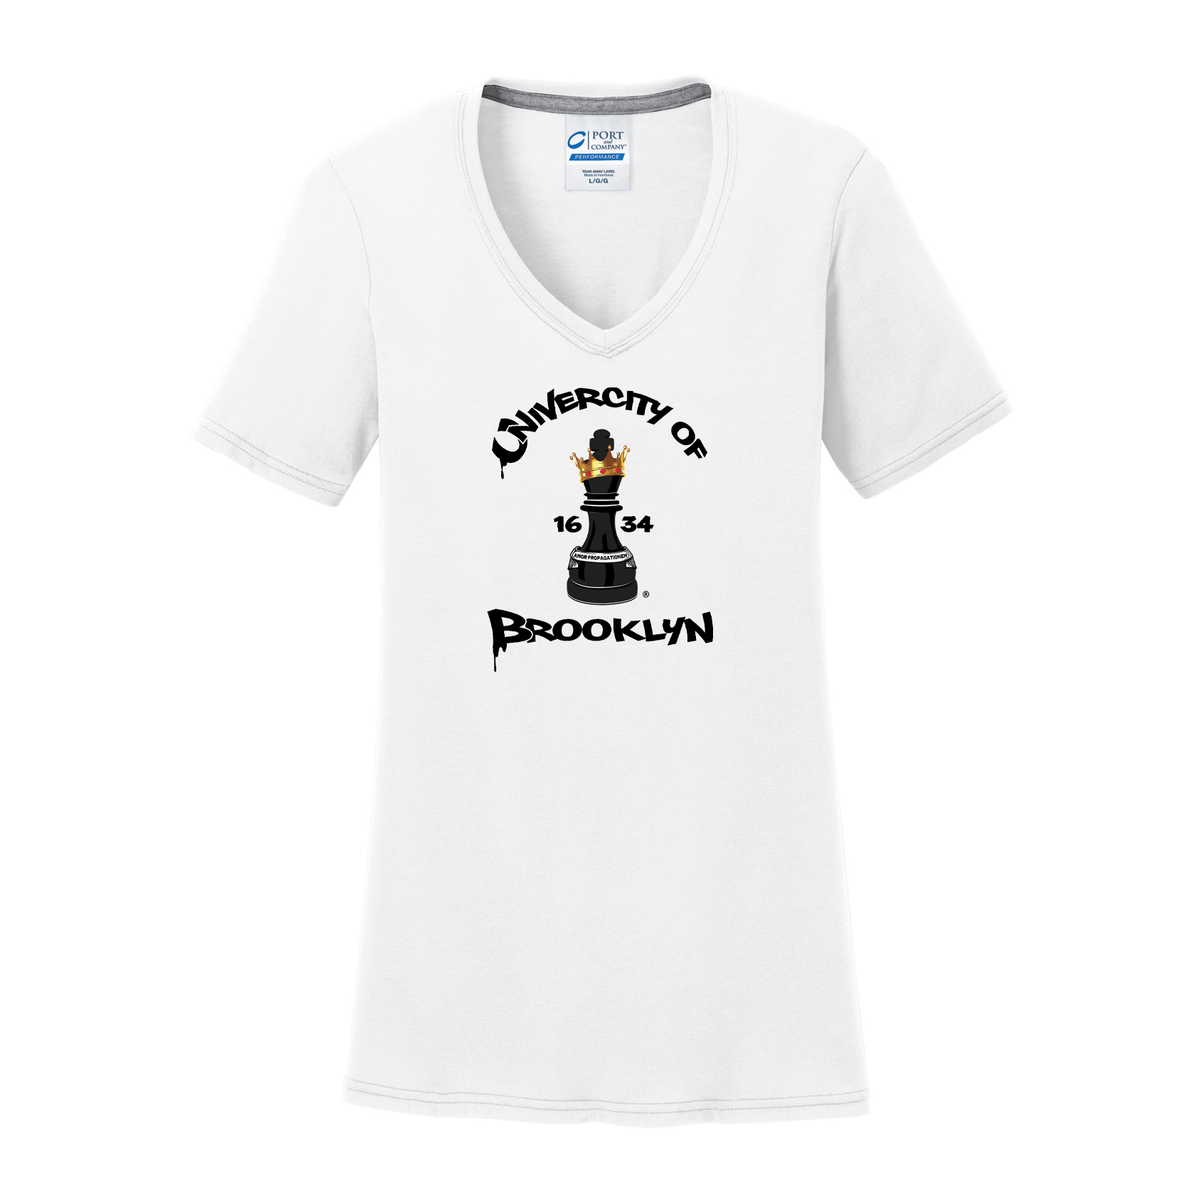 UniverCity of Brooklyn Women's T-Shirt